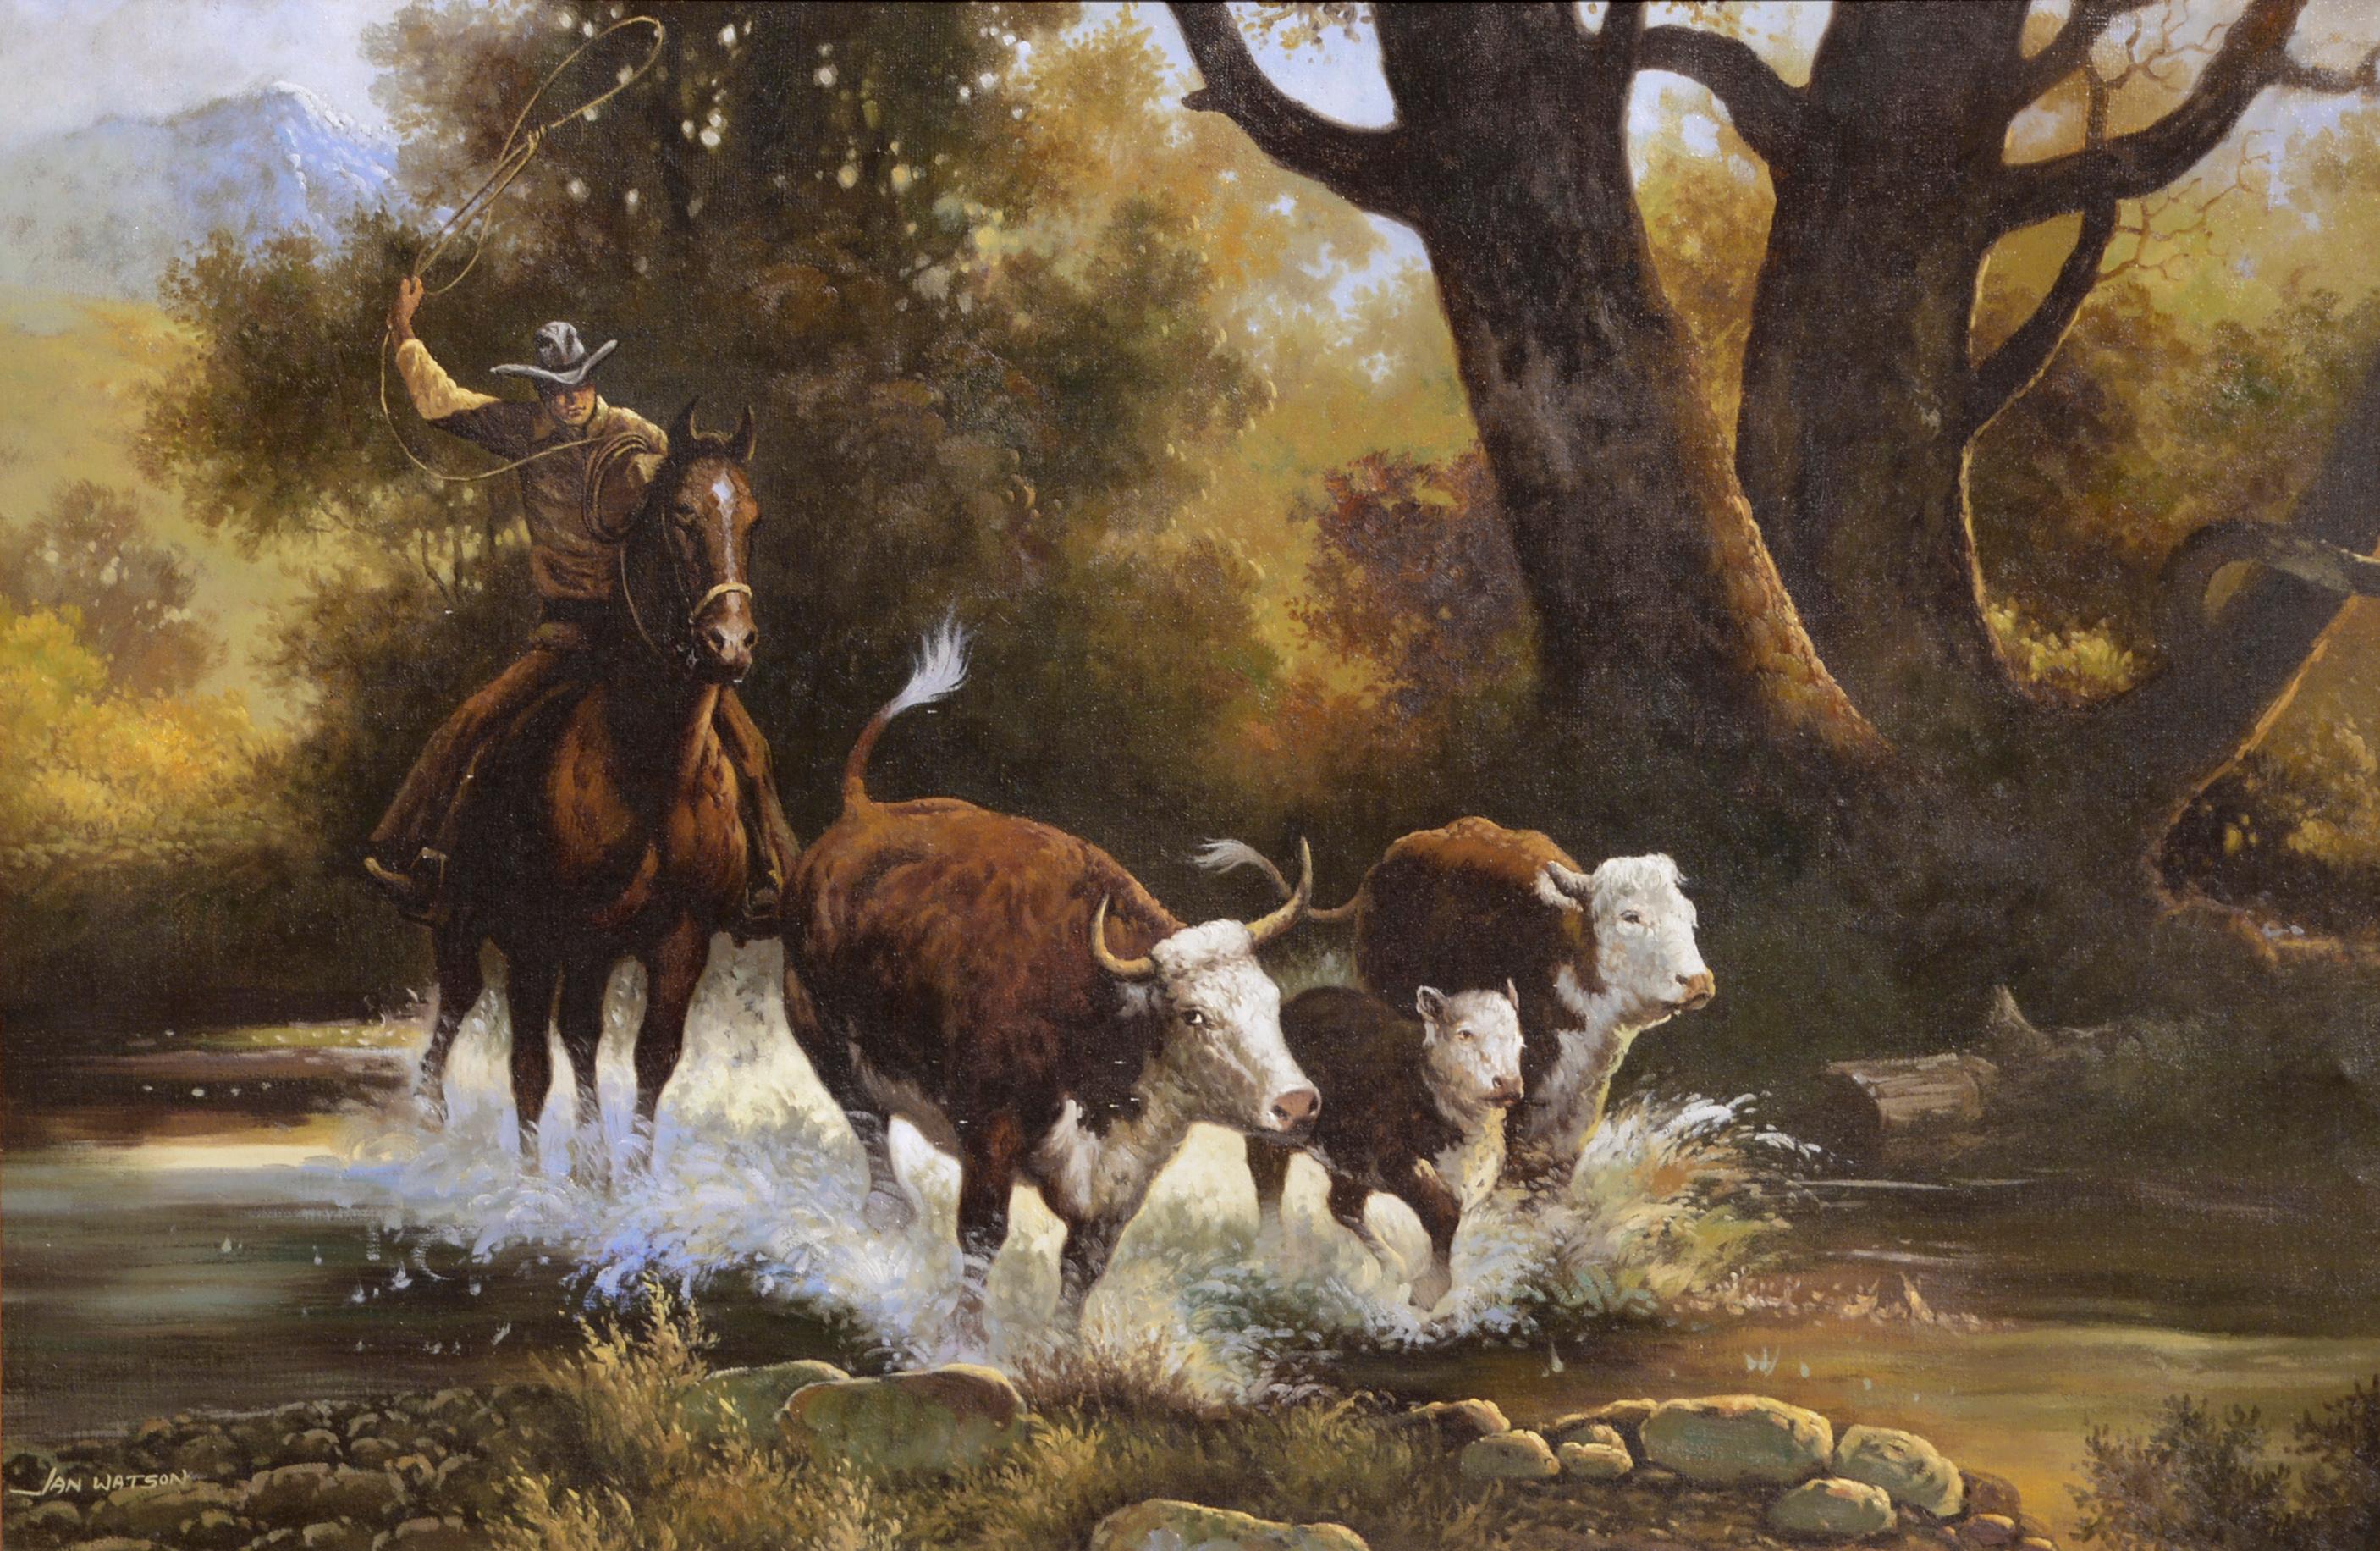 Cowboy-Drehkachel, realistische figurative Landschaft  – Painting von Jan Watson